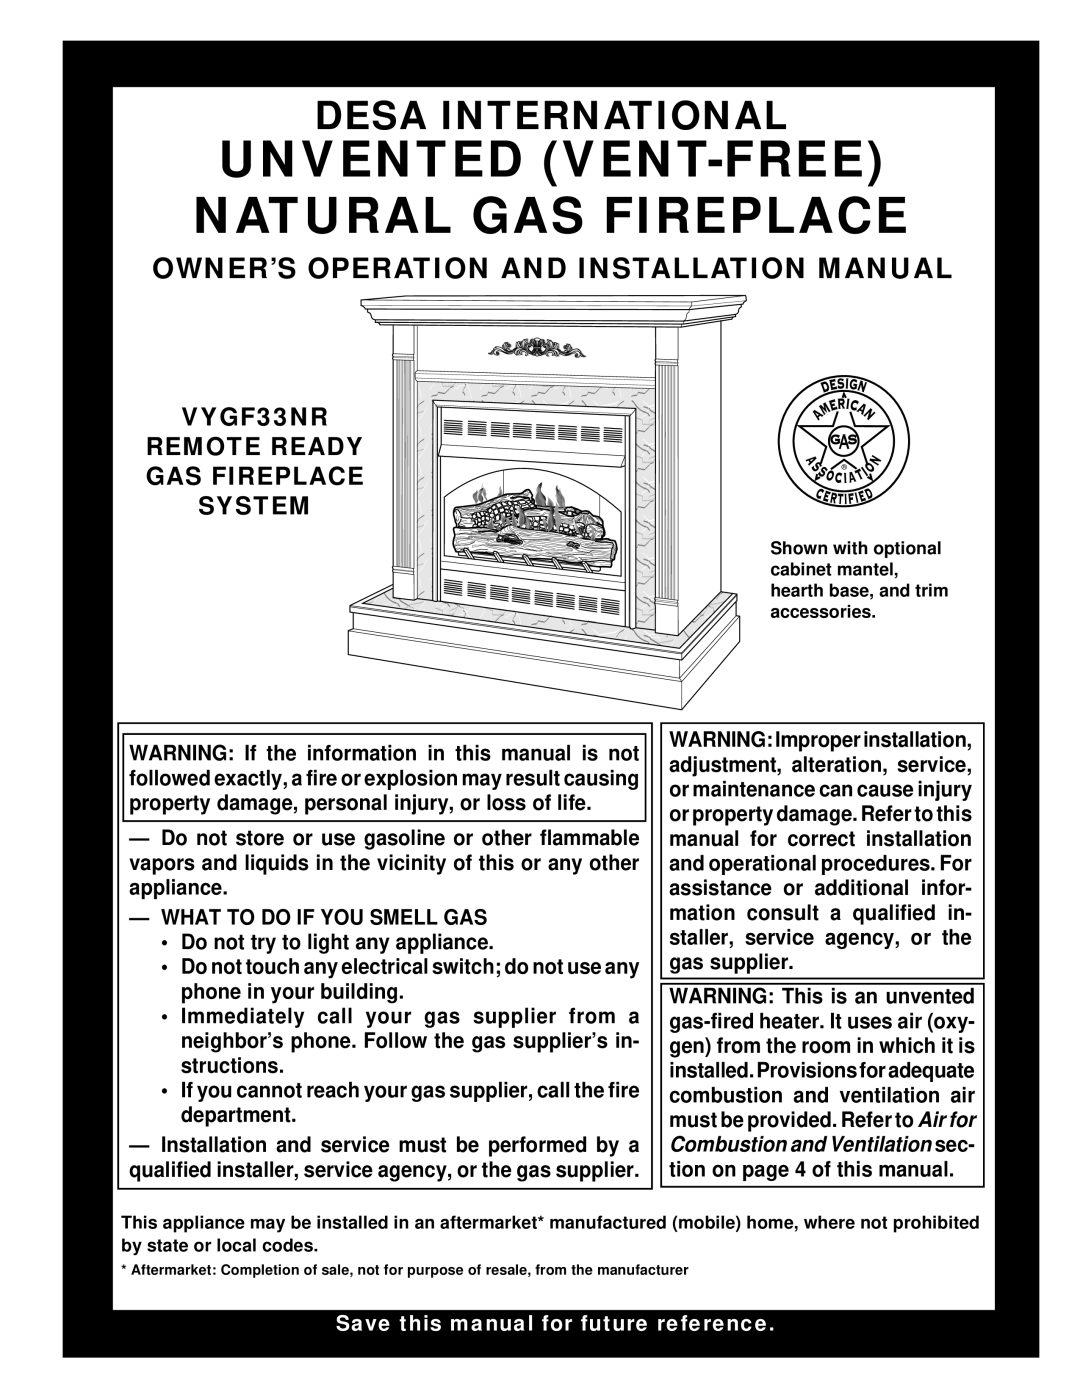 Desa VYGF33NR installation manual Owner’S Operation And Installation Manual, What To Do If You Smell Gas 